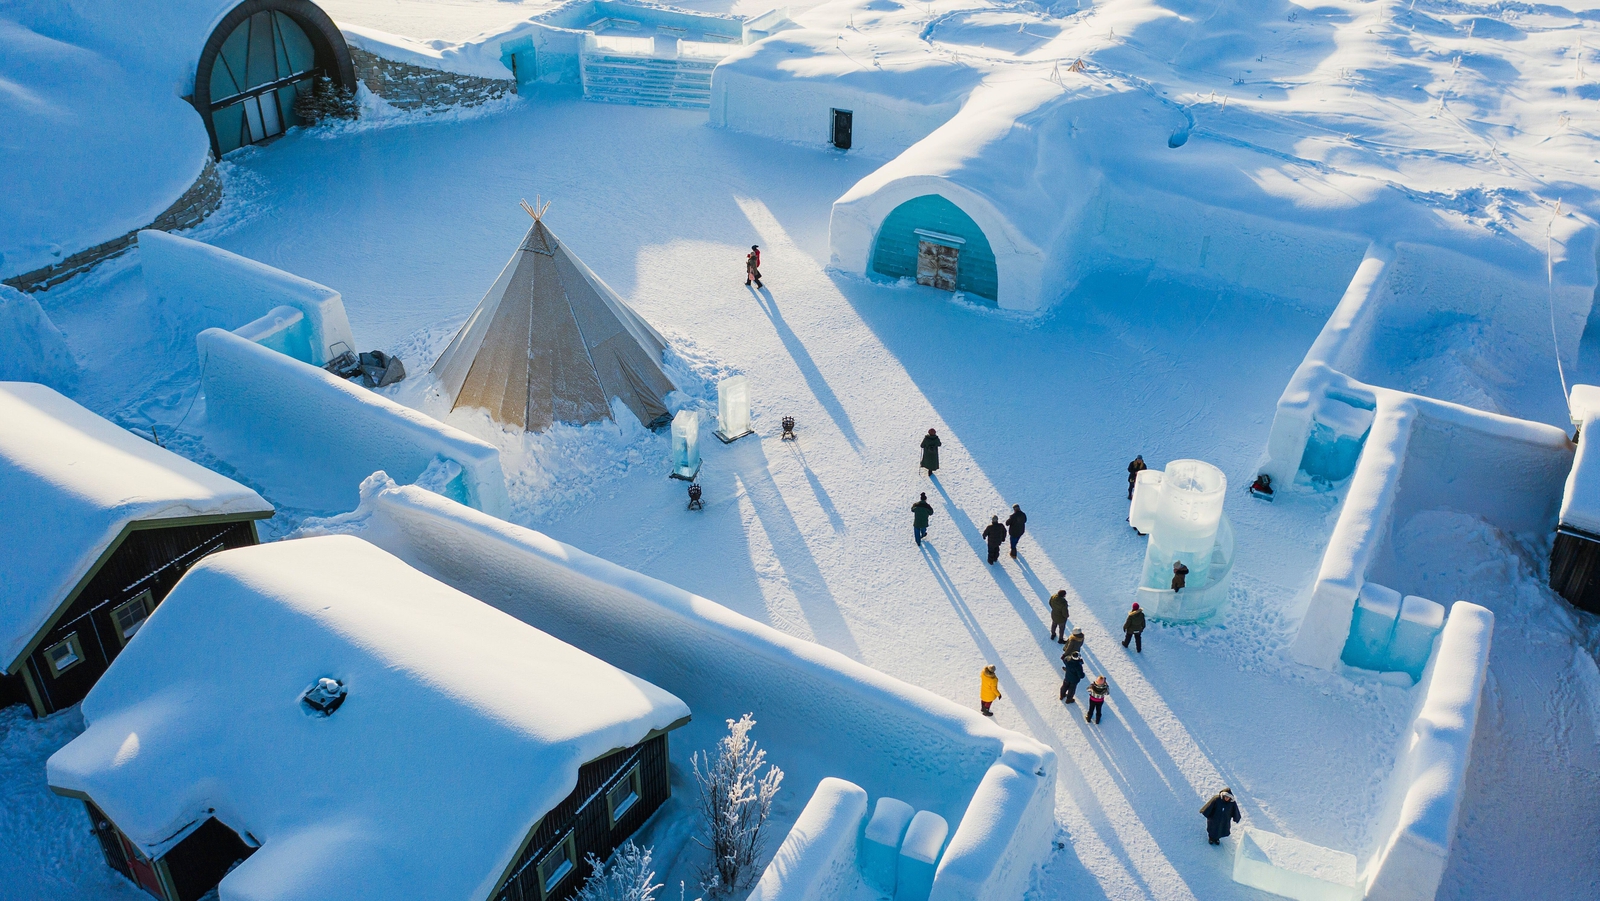 Swedish ice hotel offers tourists subzero temperatures